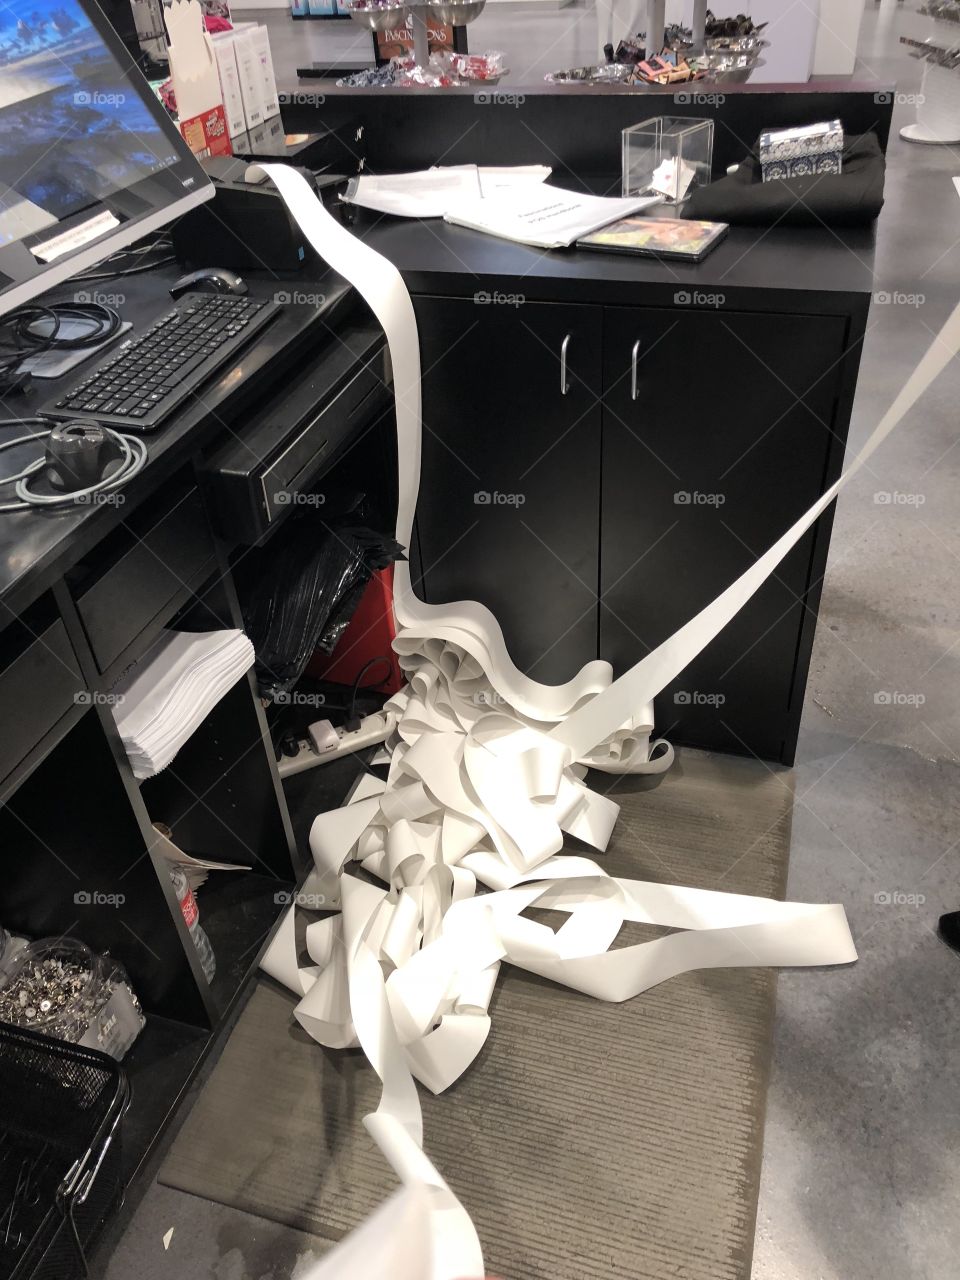 Receipt printer malfunction 